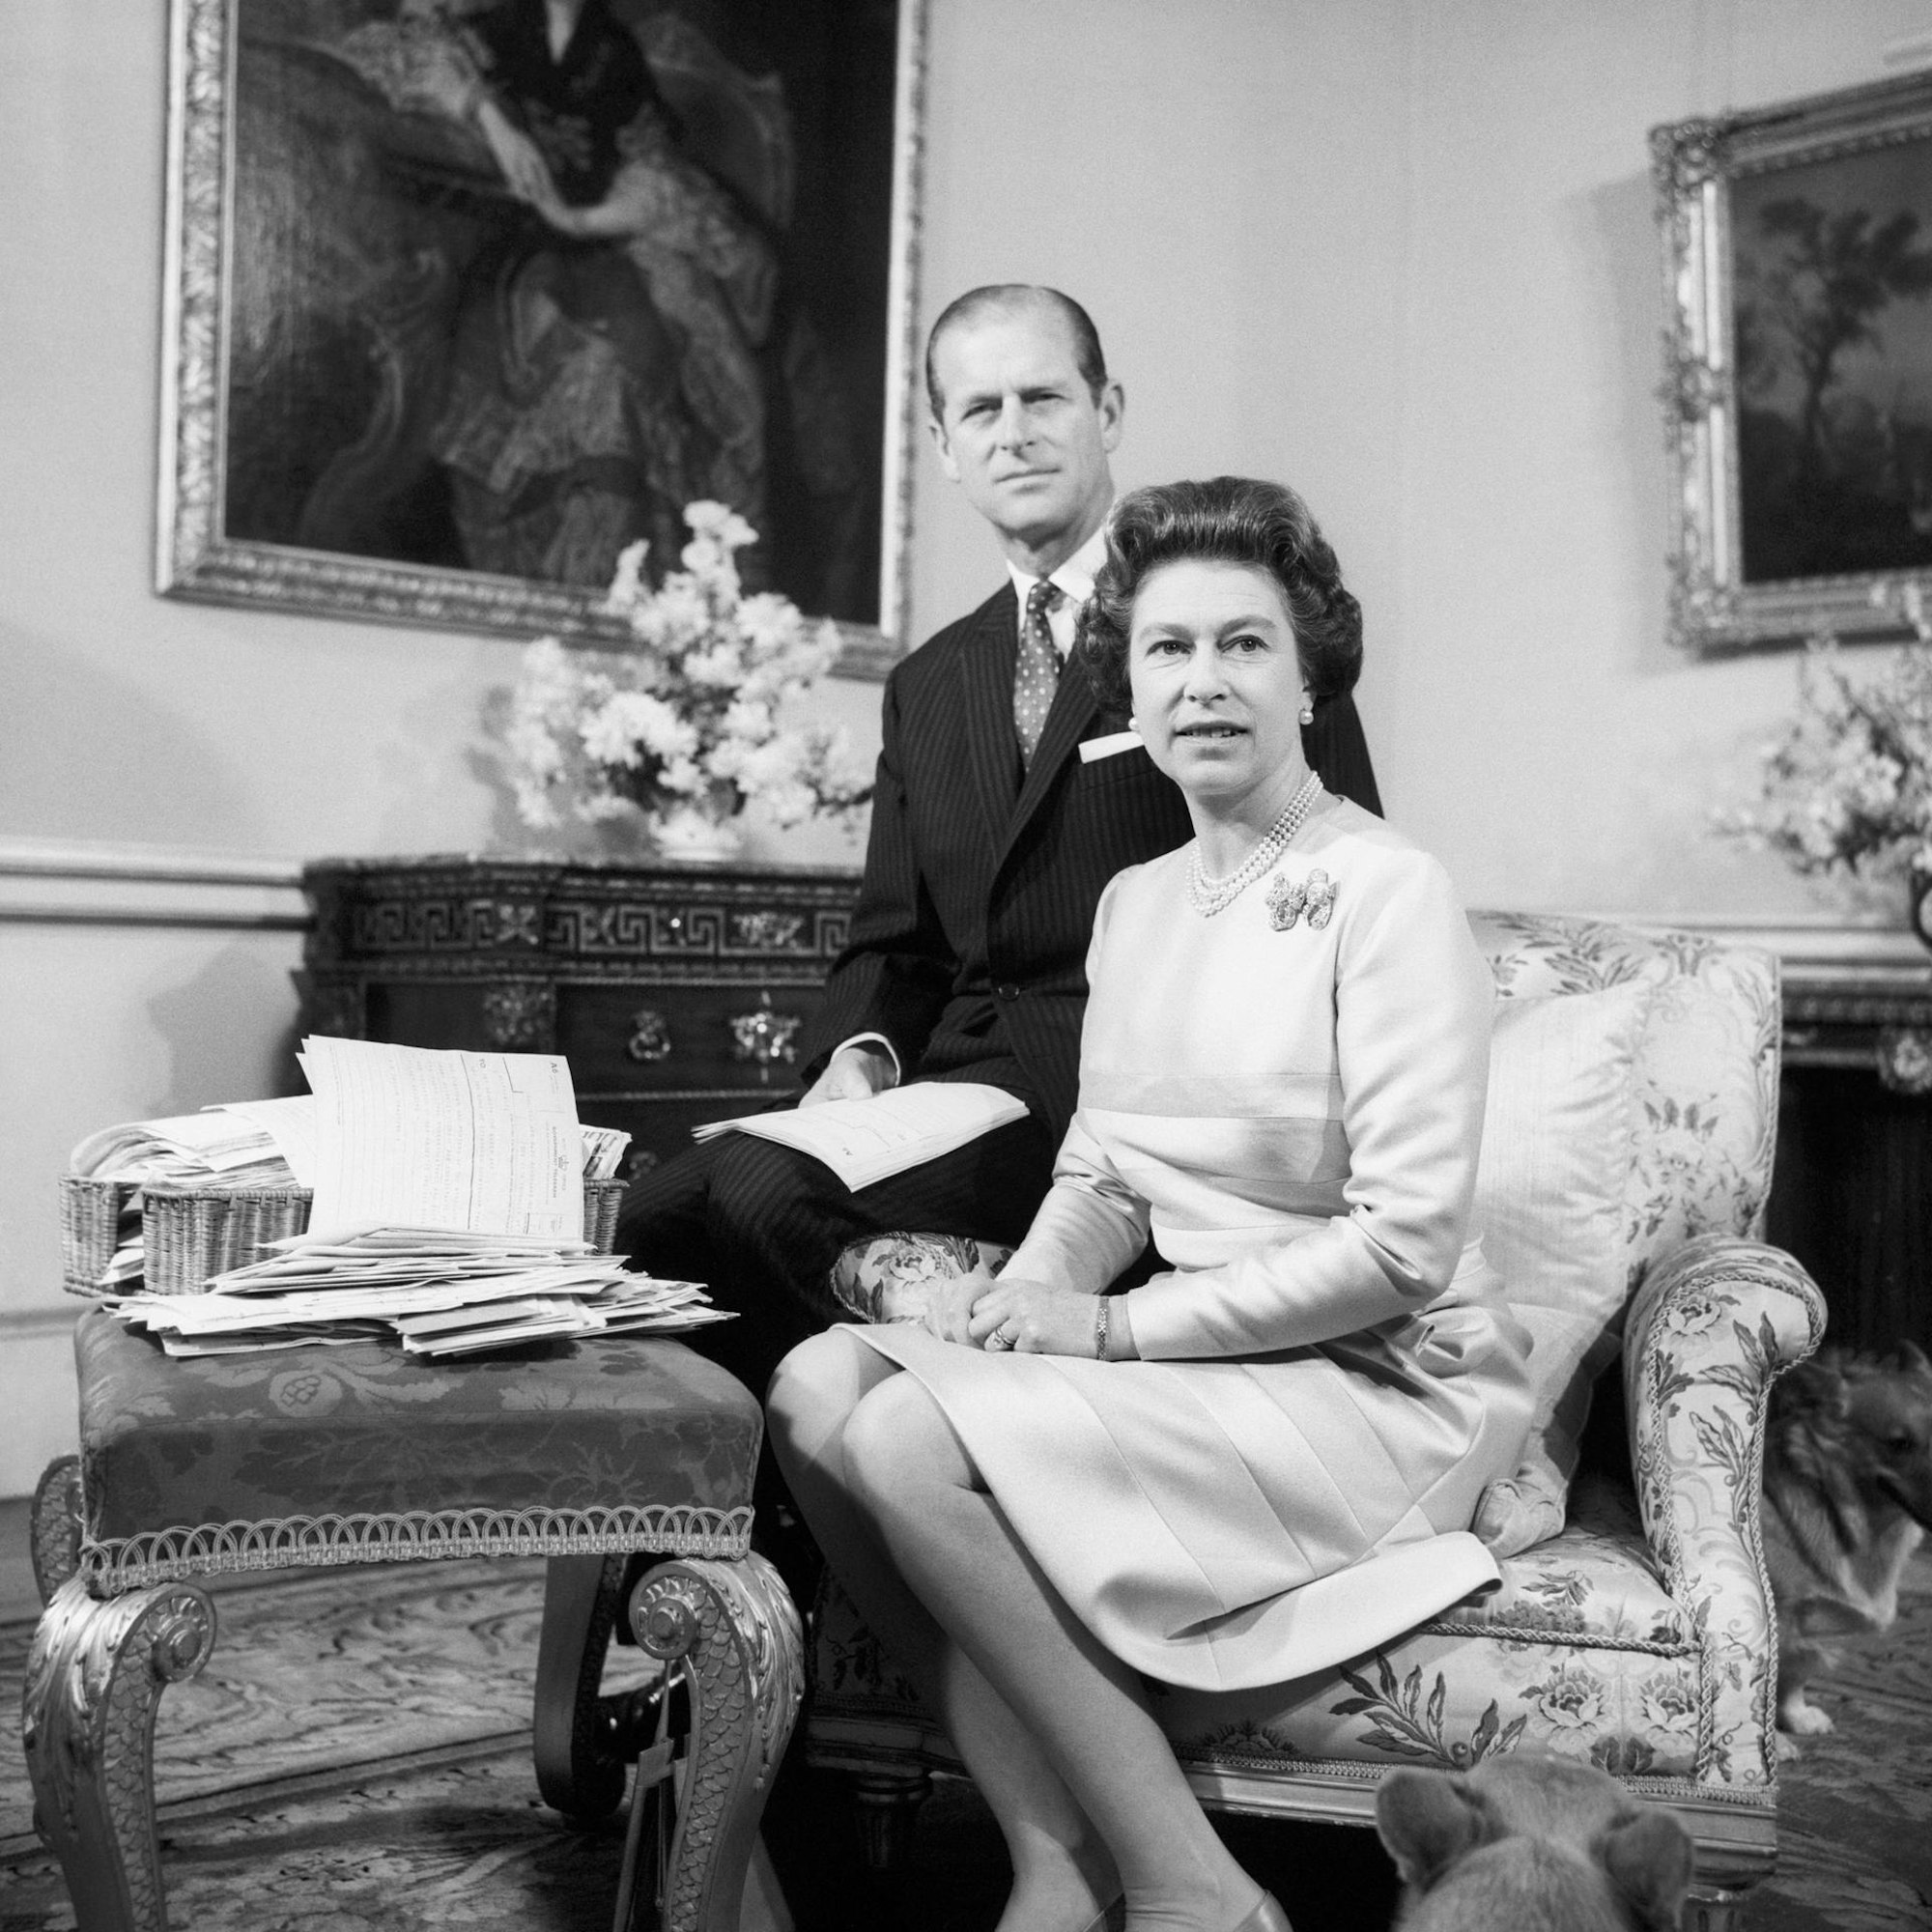 Queen Silberhochzeit am 20.11.1972 im Buckingham Palace in London